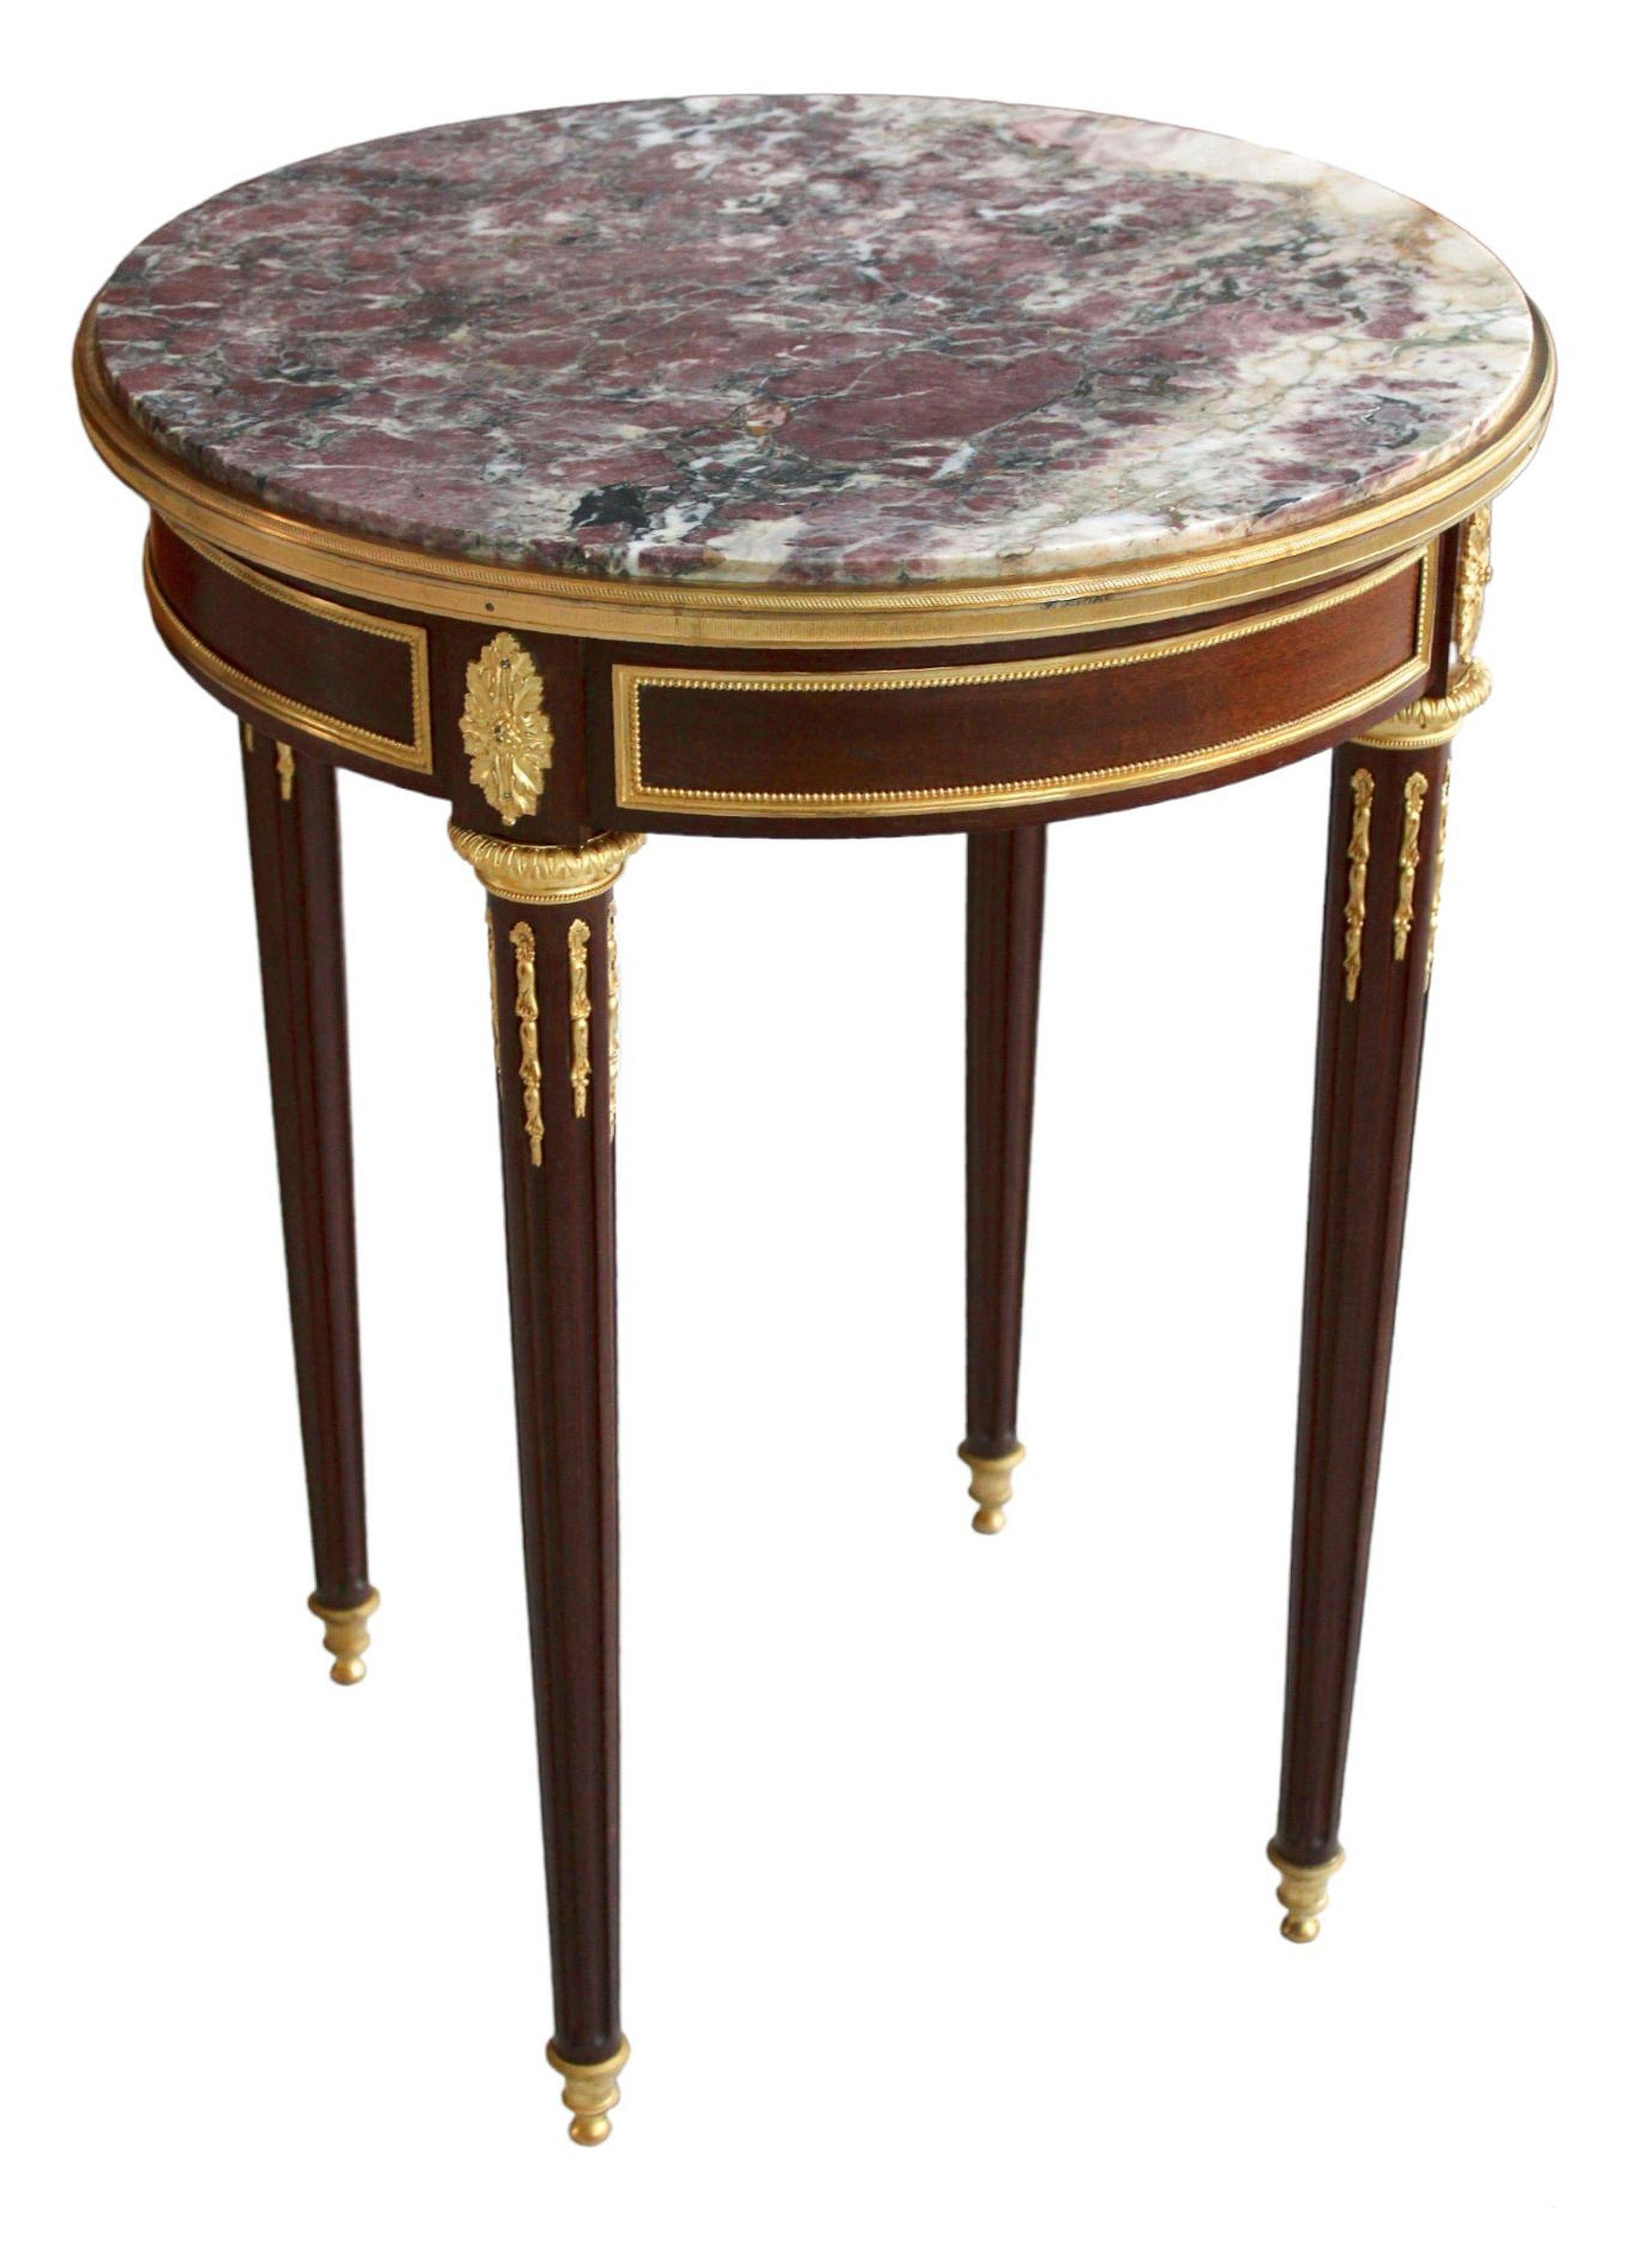 Francis Linke - Table, oak, mahogany, marble, gilded bronze, h 75.5 cm; d 59 cm